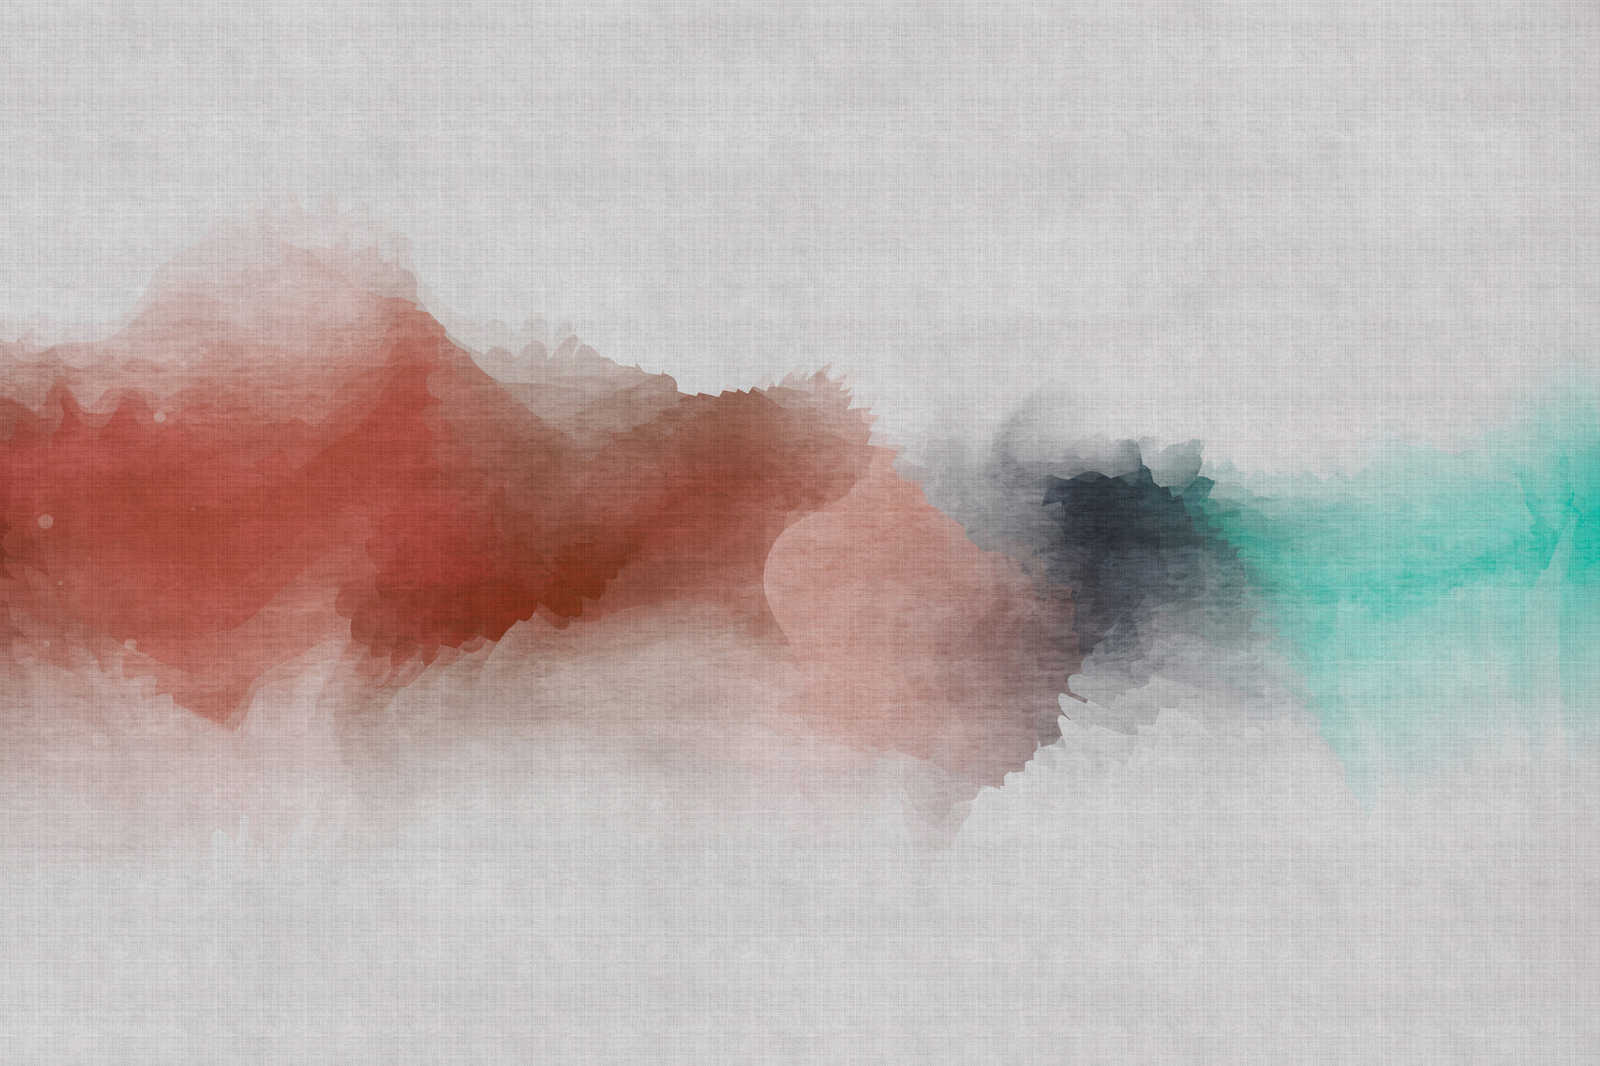             Daydream 2 - Leinwandbild in naturleinen Struktur mit Farbfleck im Aquarell Stil – 0,90 m x 0,60 m
        